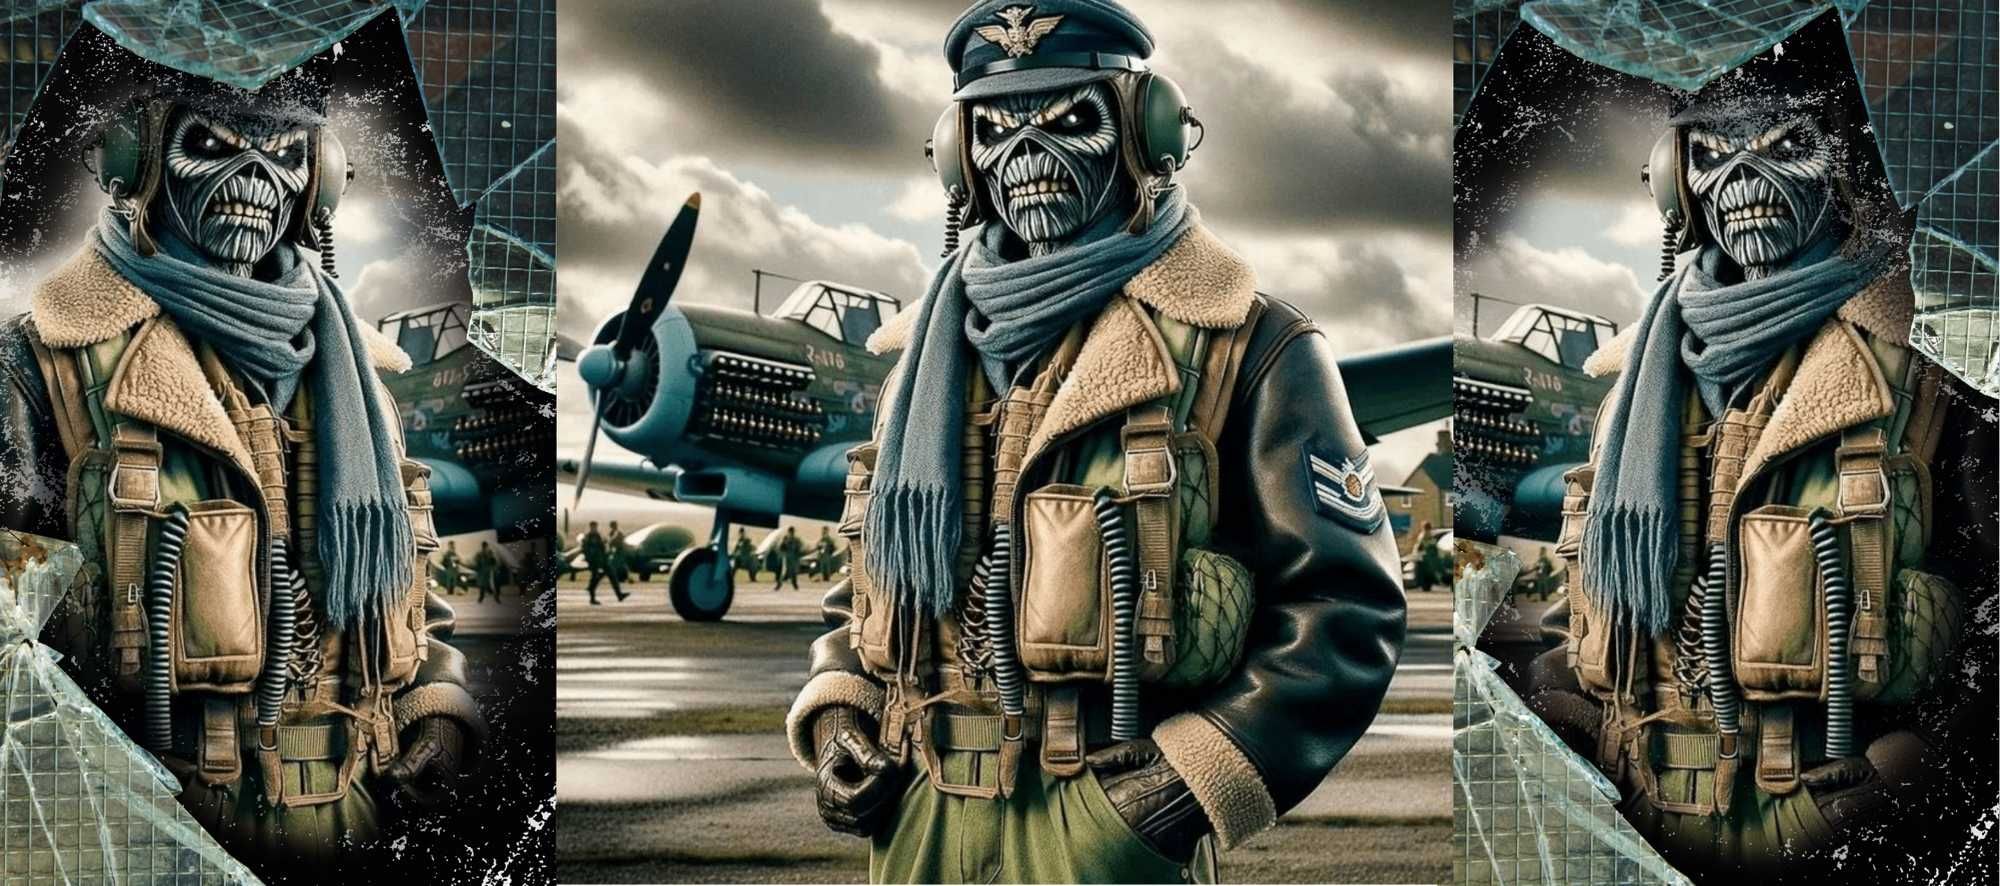 Caneca Iron Maiden Eddie Heavy Metal Esqueleto Zombie WWII